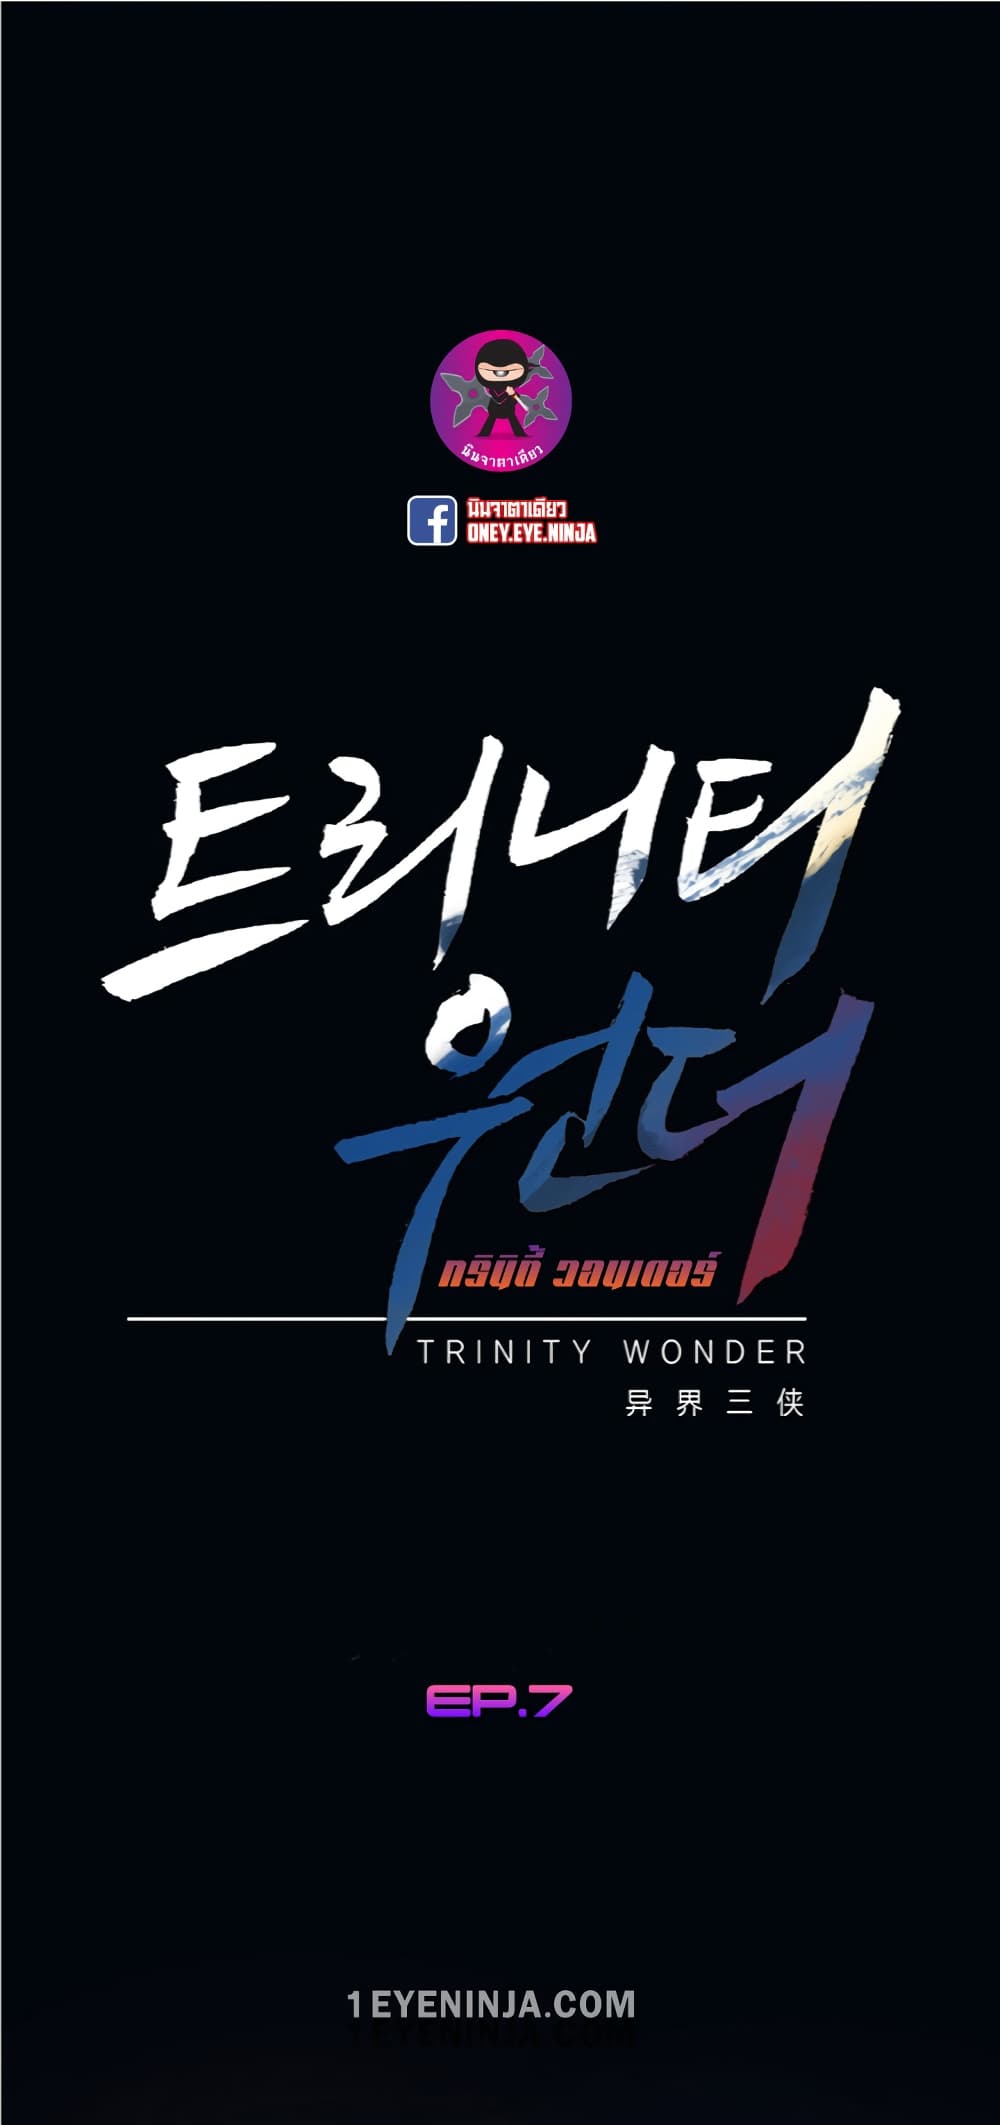 Trinity Wonder 7 (2)